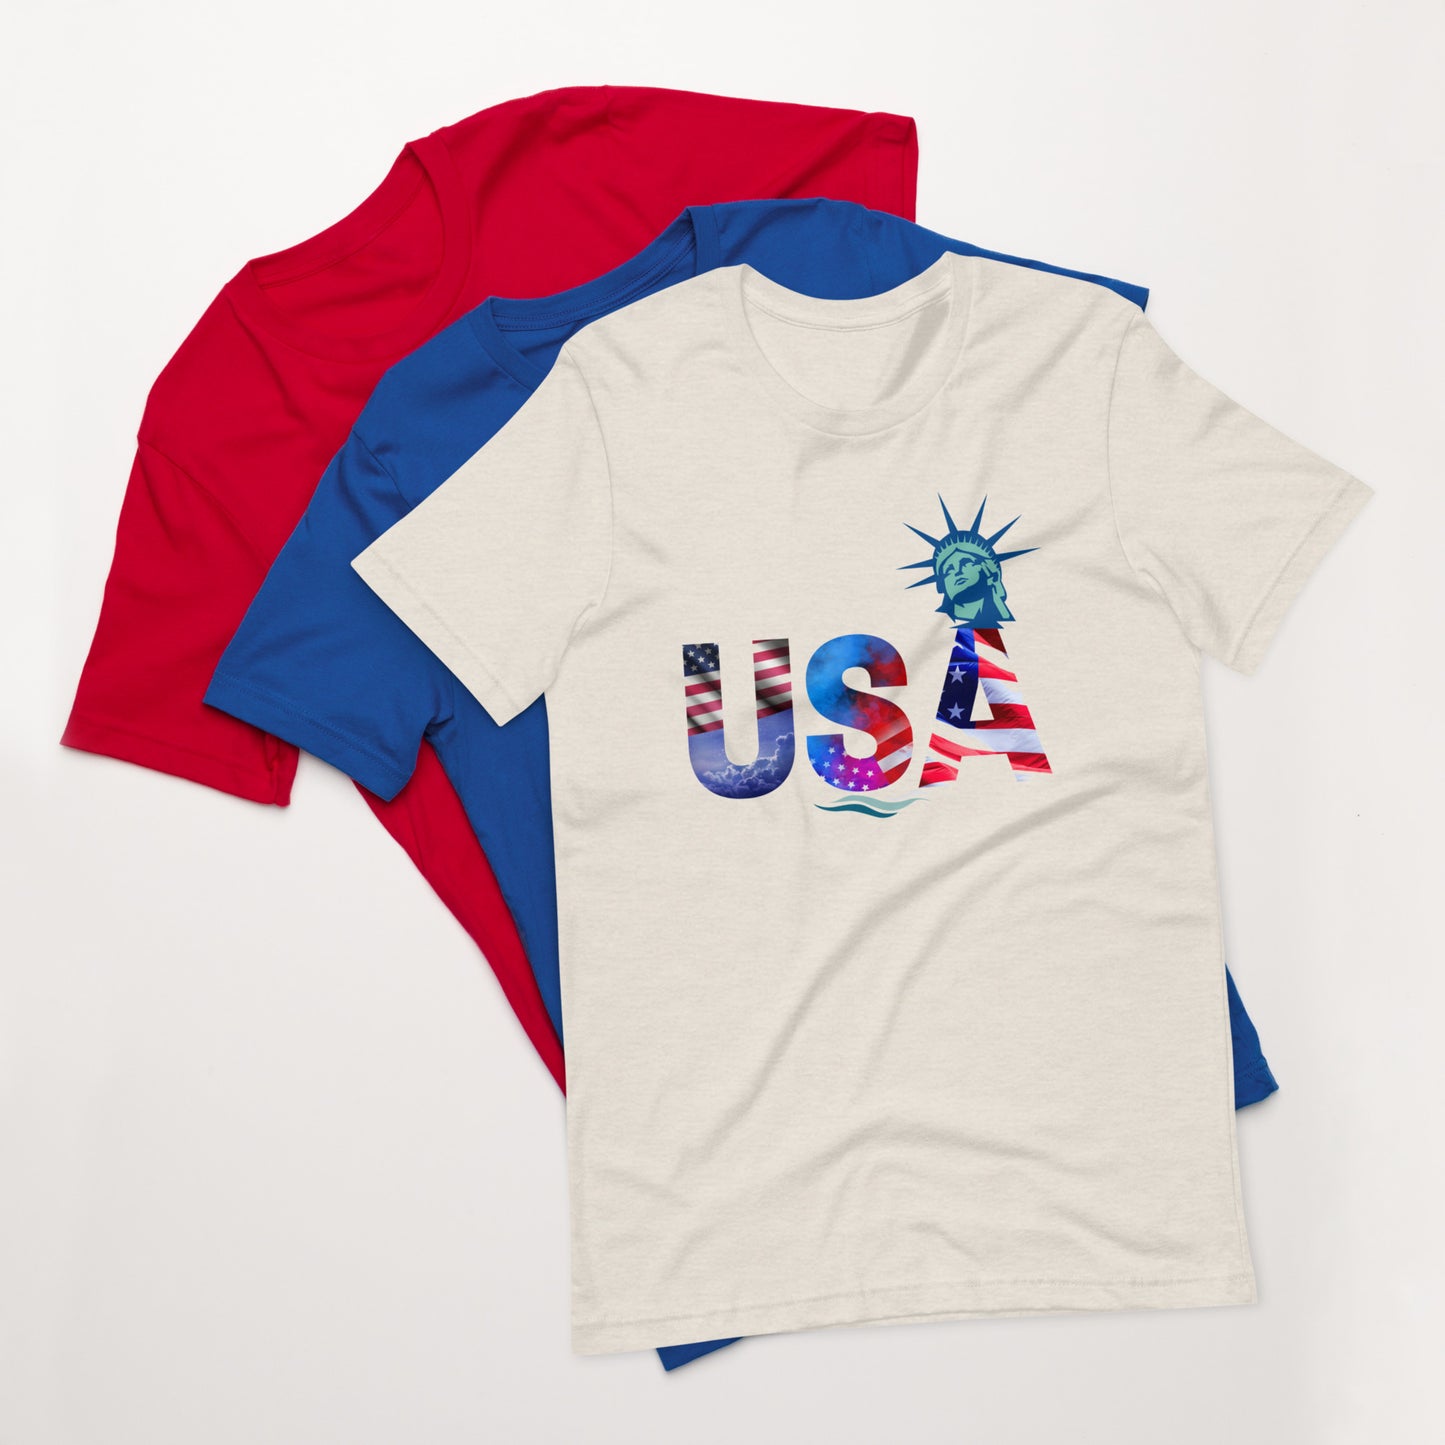 USA Unisex t-shirt